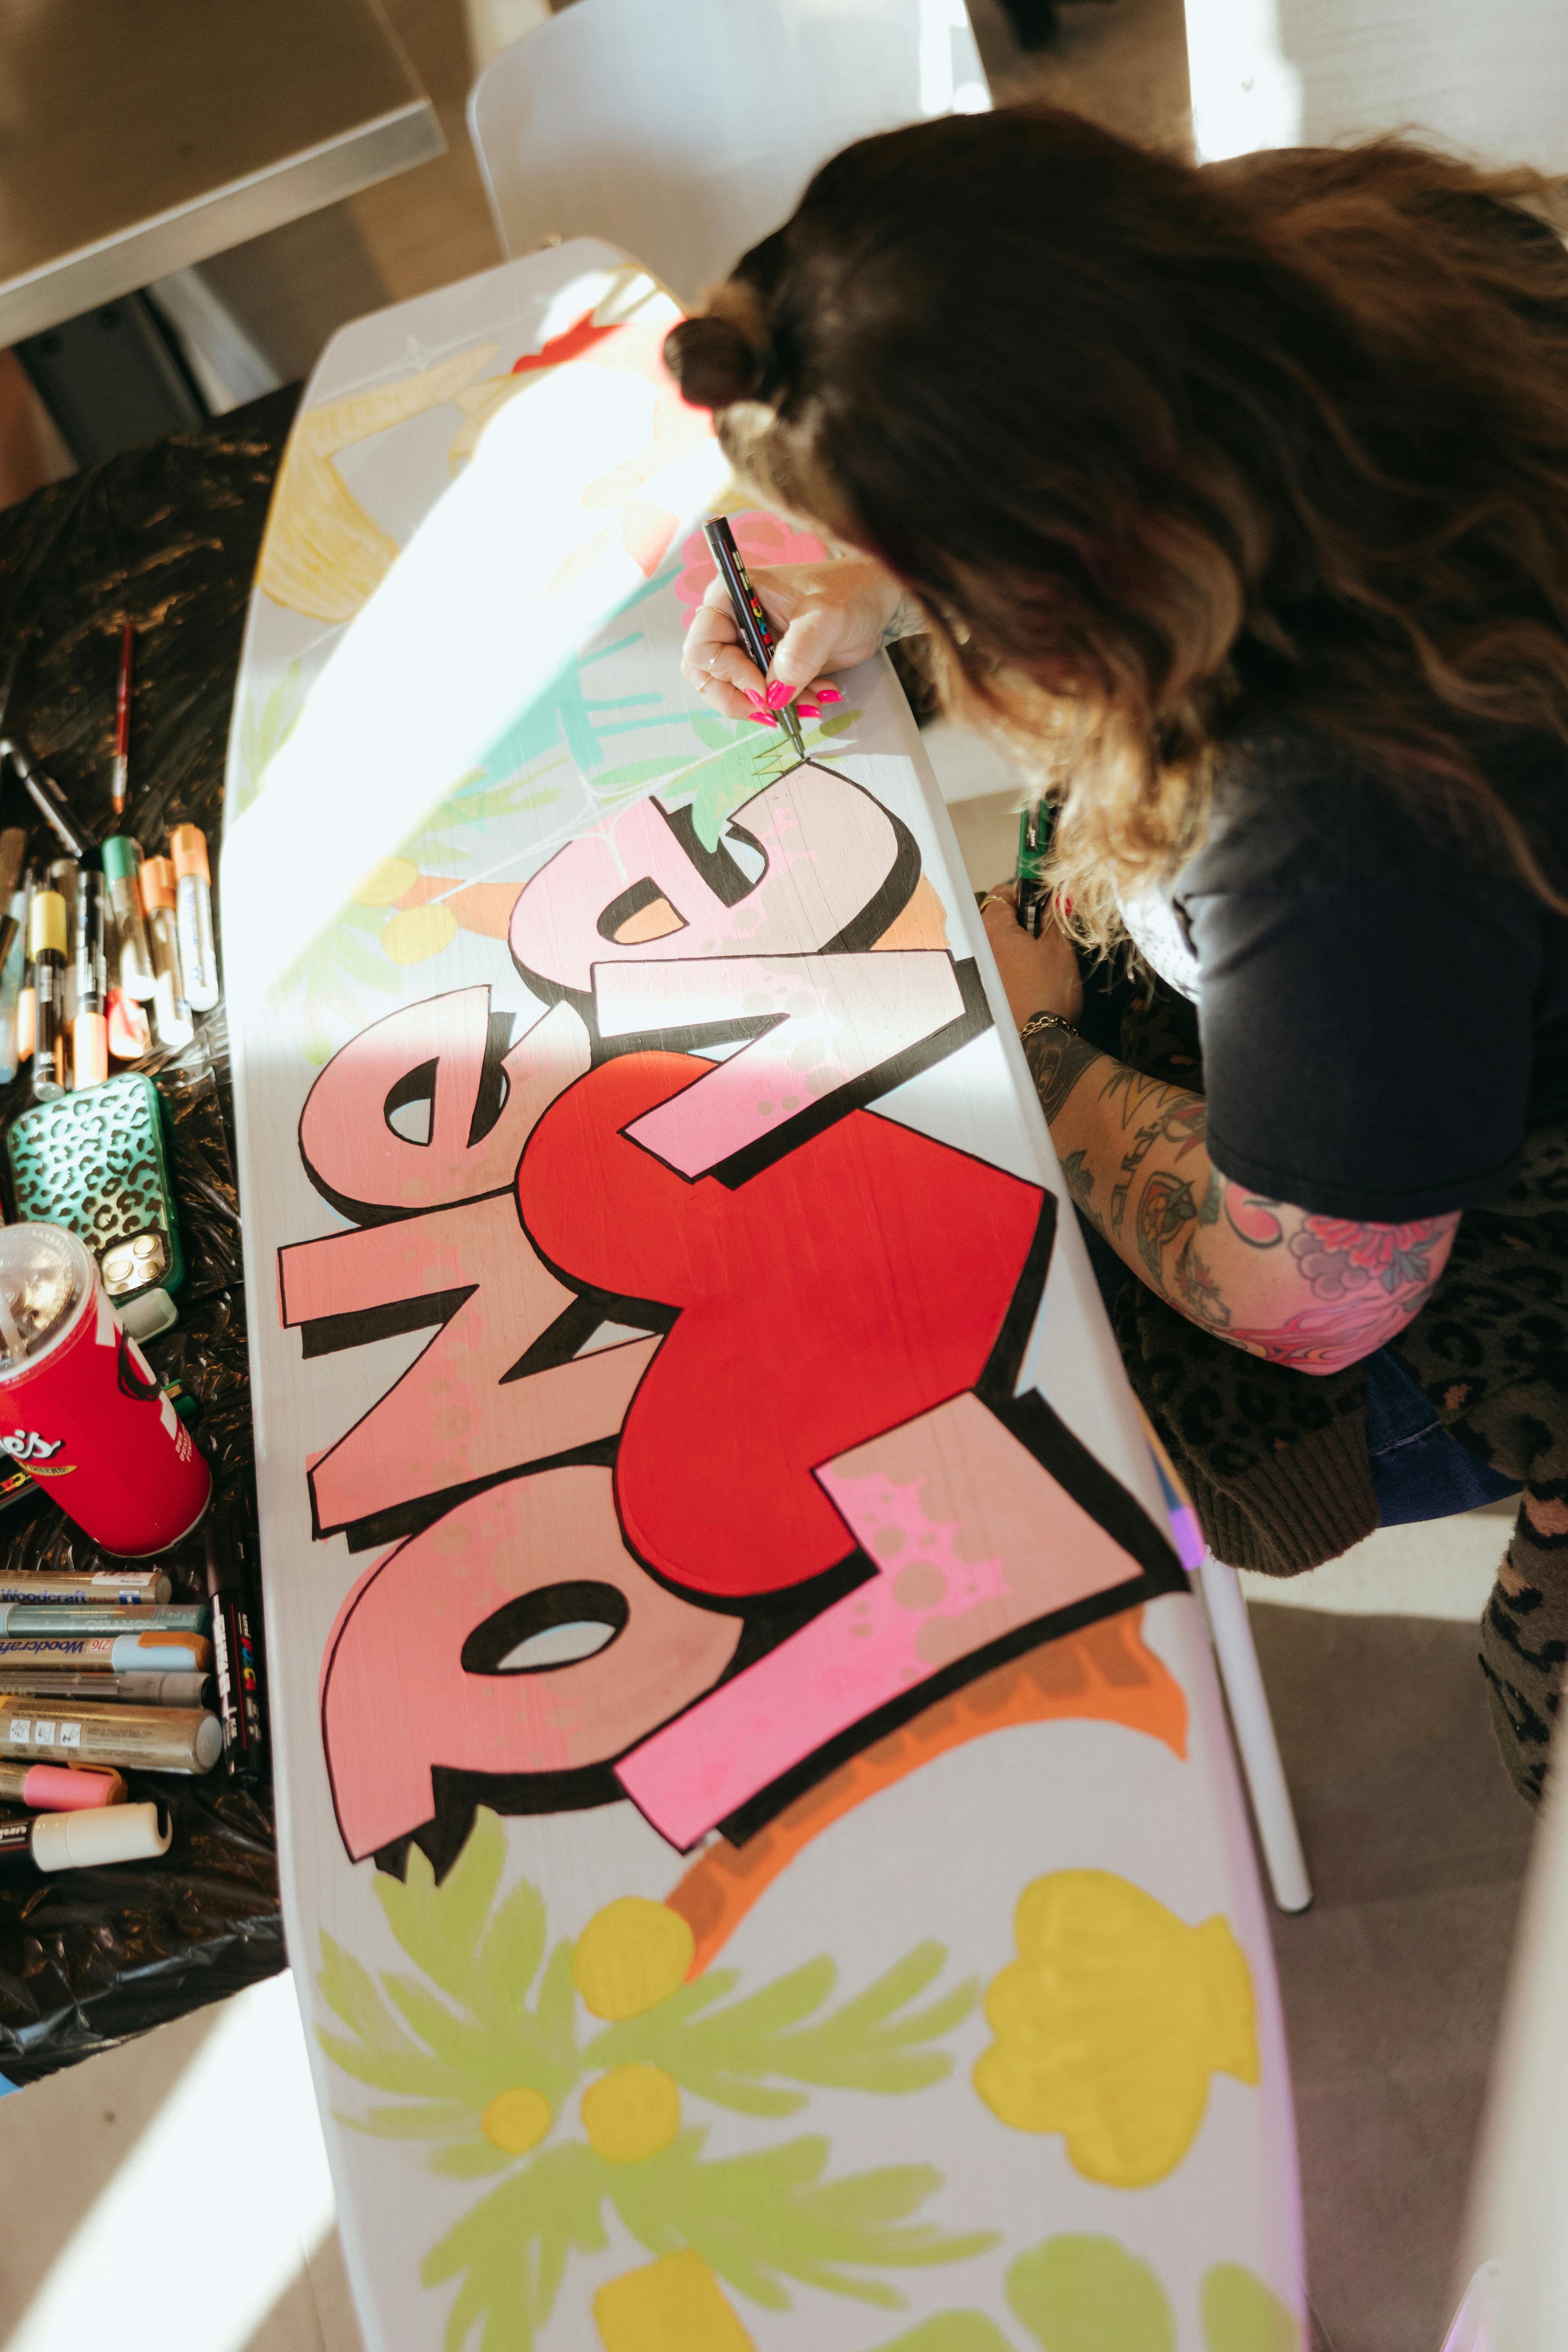 Delvs, a local Miami graffiti artist, creating a custom art piece for the grand opening